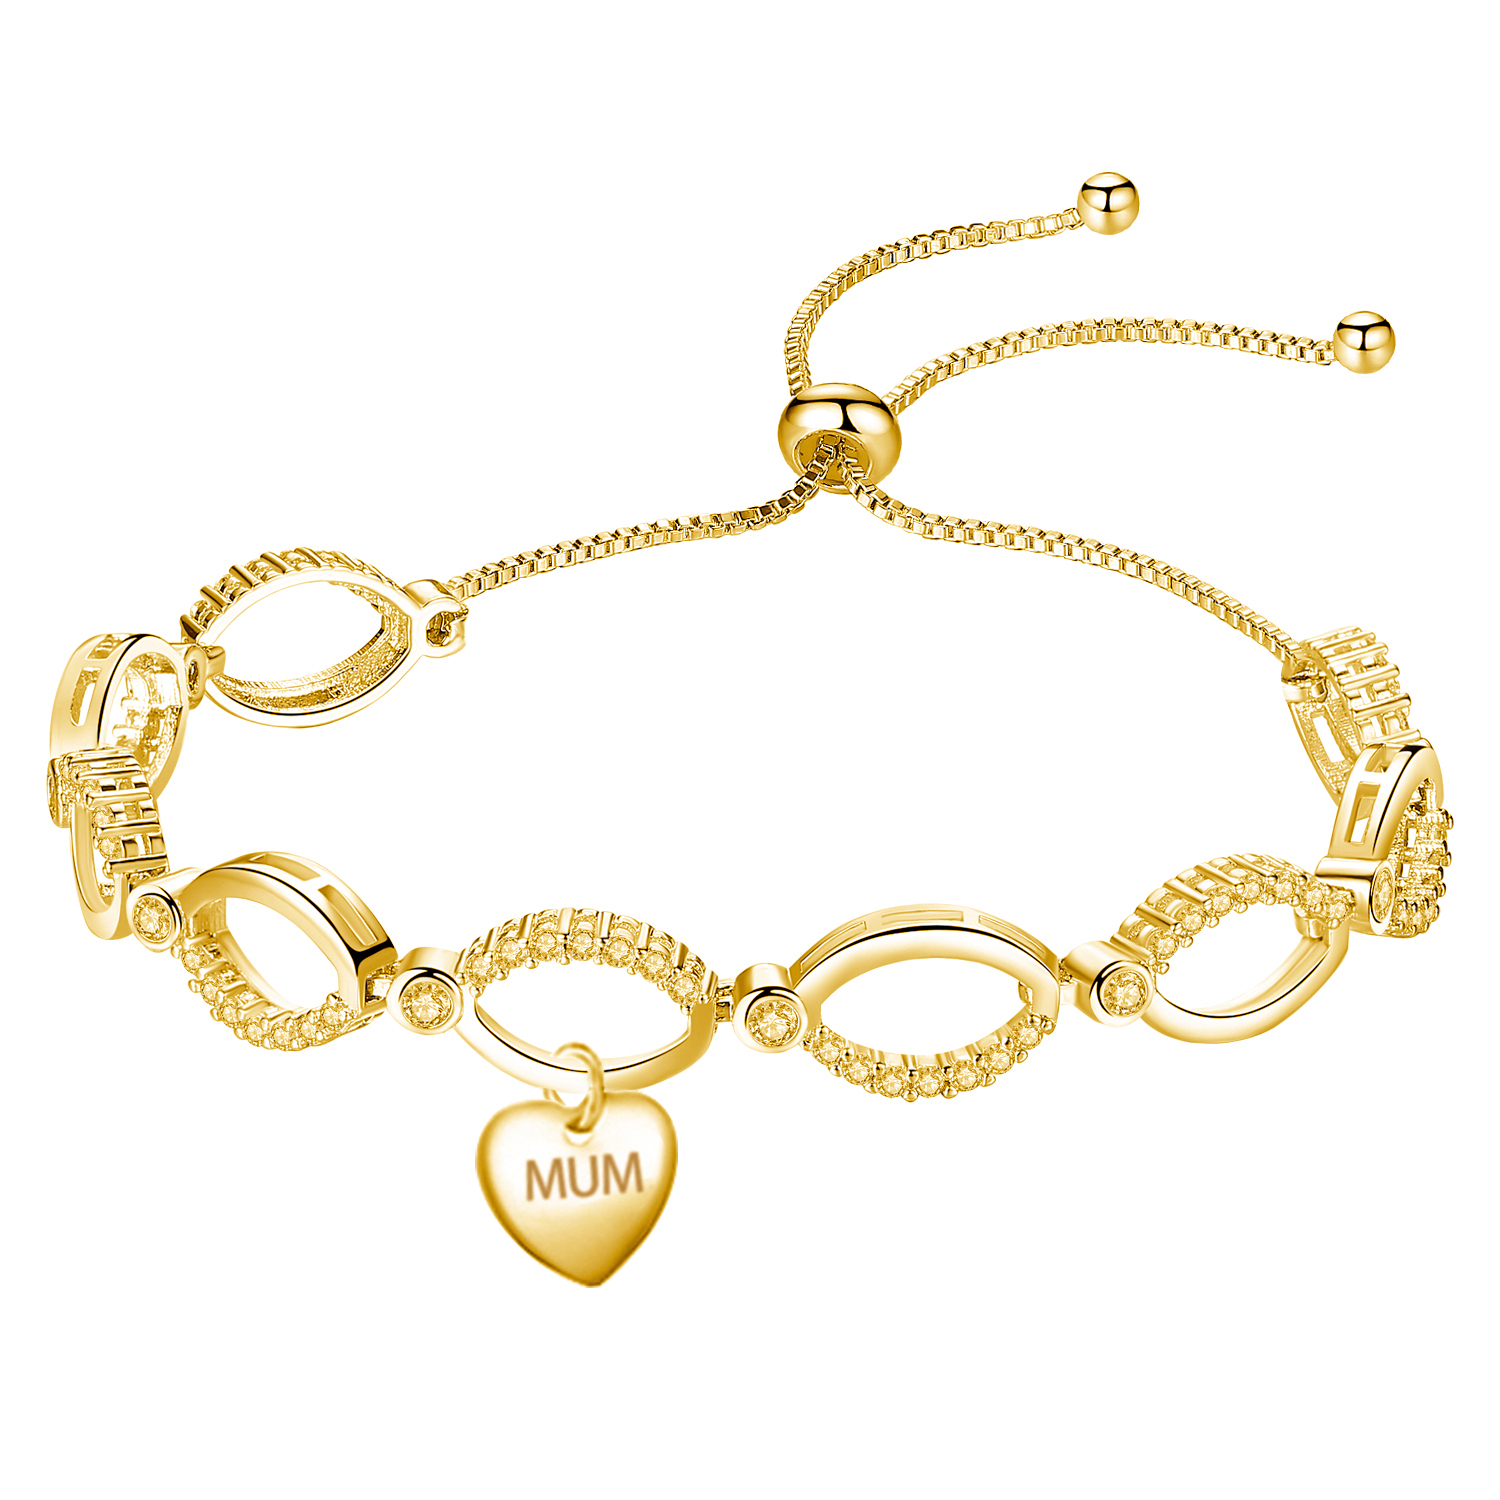 10 x Gold Adjustable Infinity Swarovski Bracelet with Personalised 'MUM' Tag l UK SELLER l GSVB061-GOLD